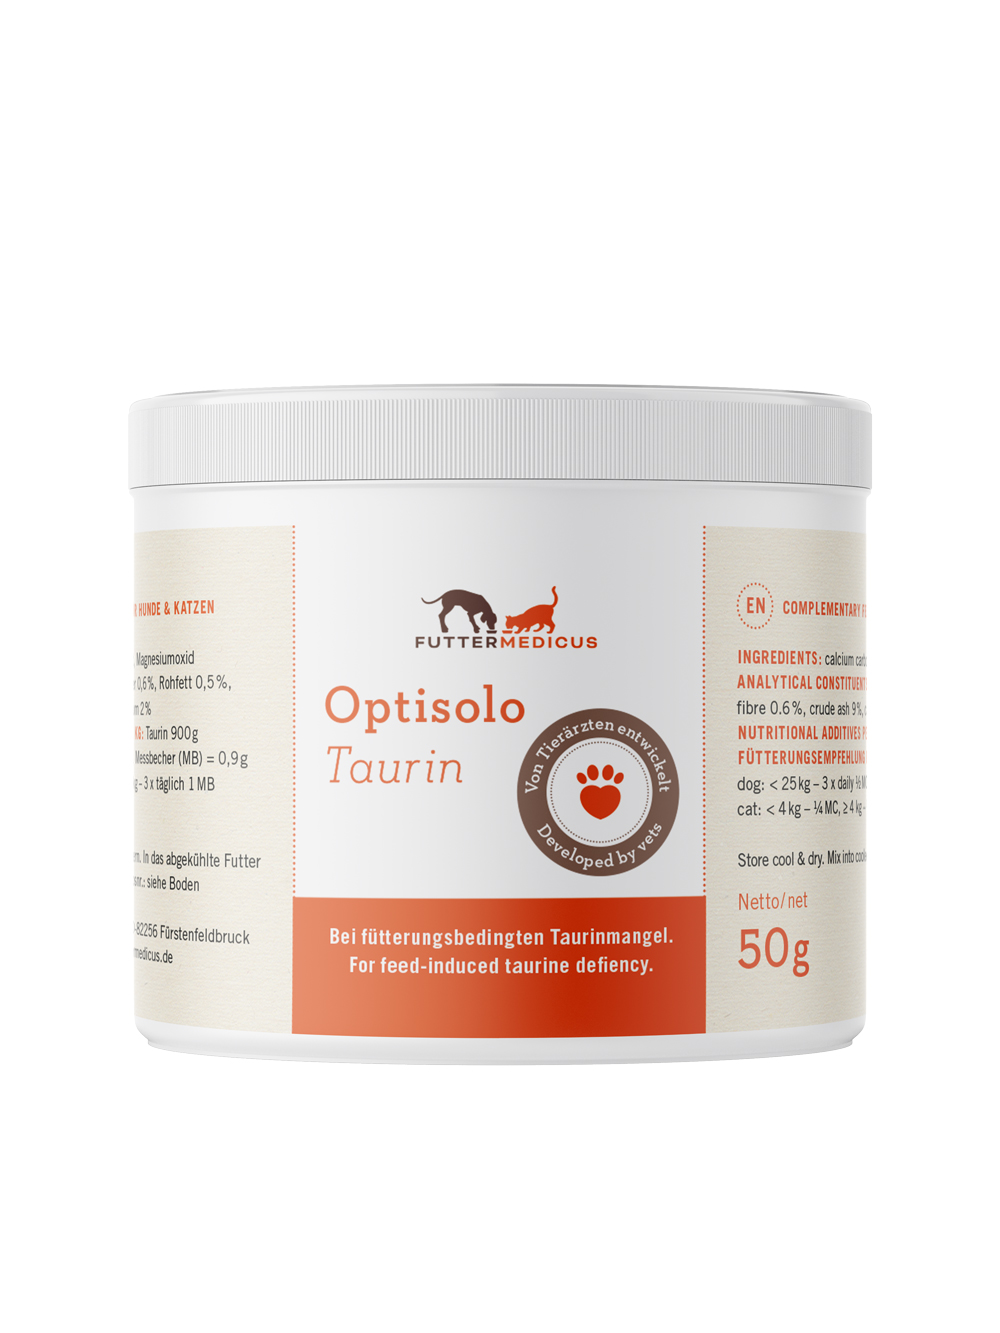 Optisolo-Taurin / Futtermedicus